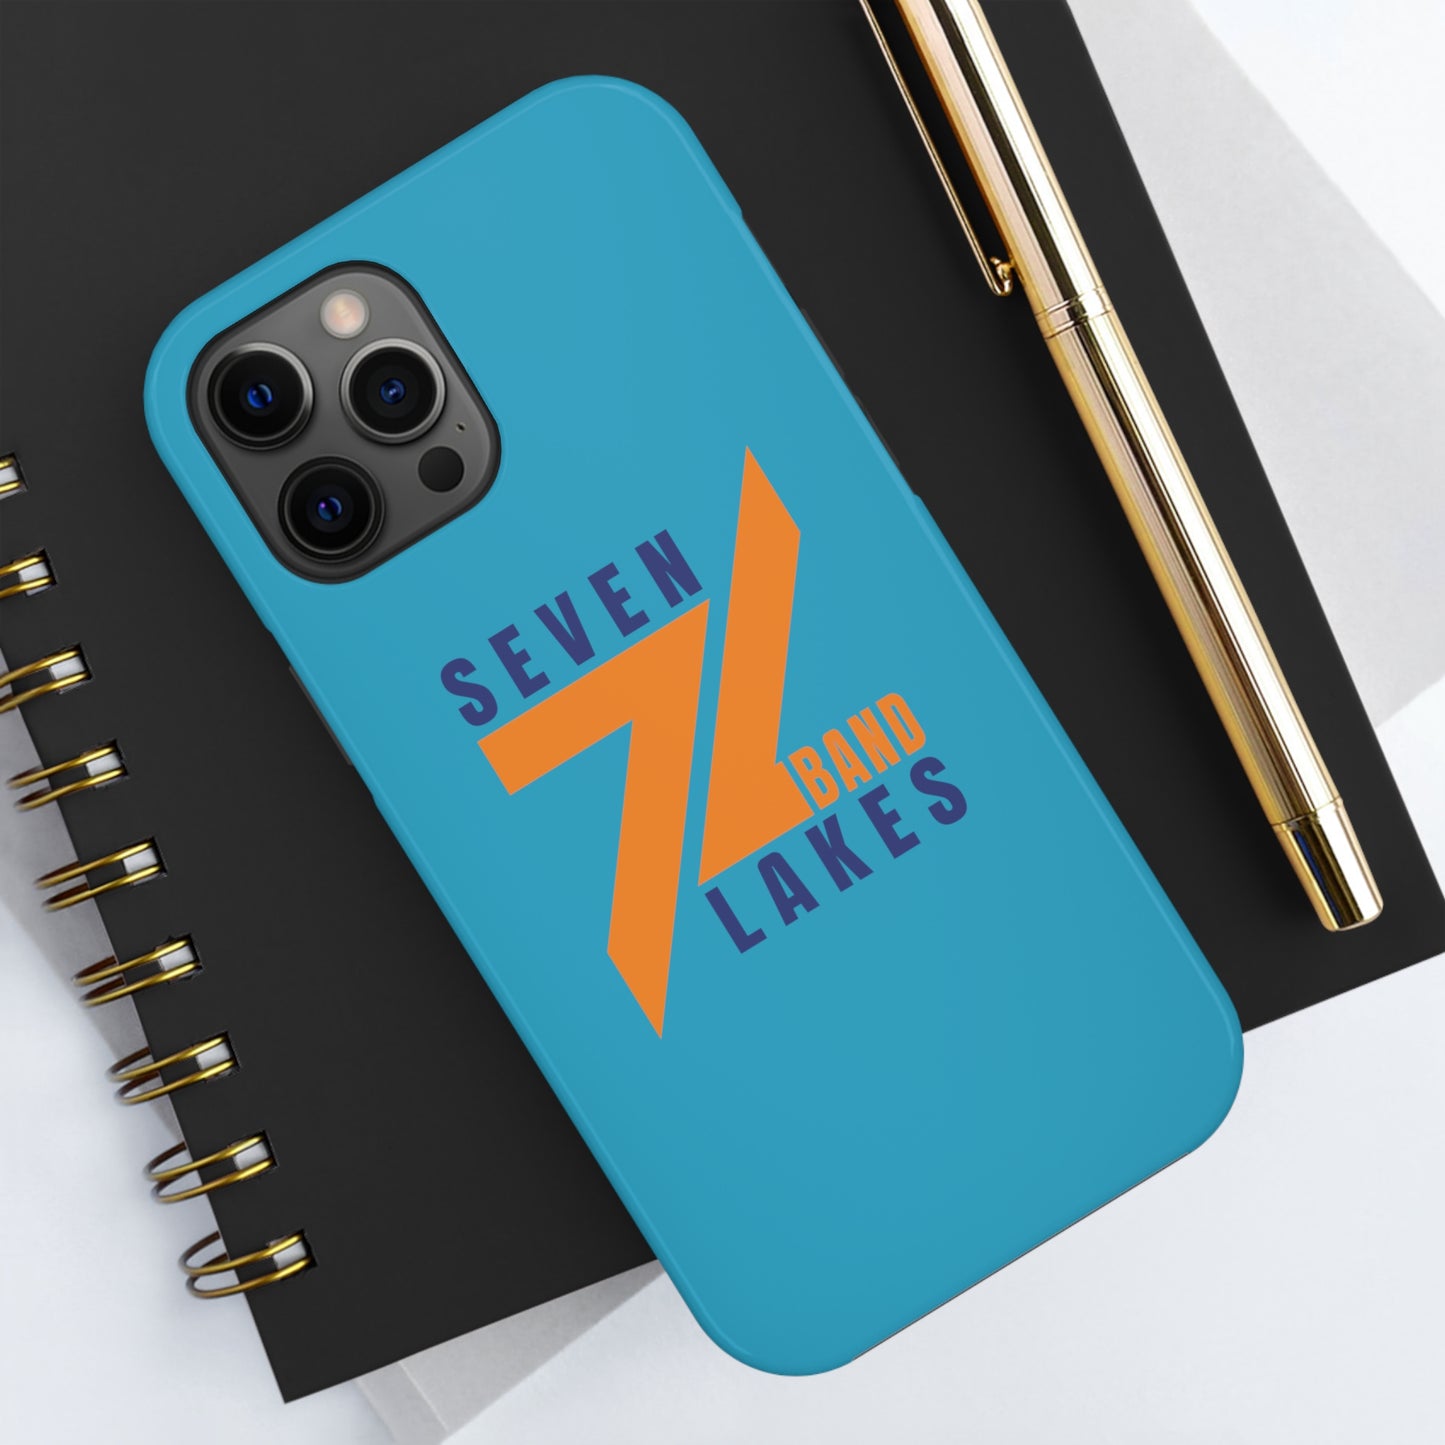 7L Band - iPhone Case - Sky Blue